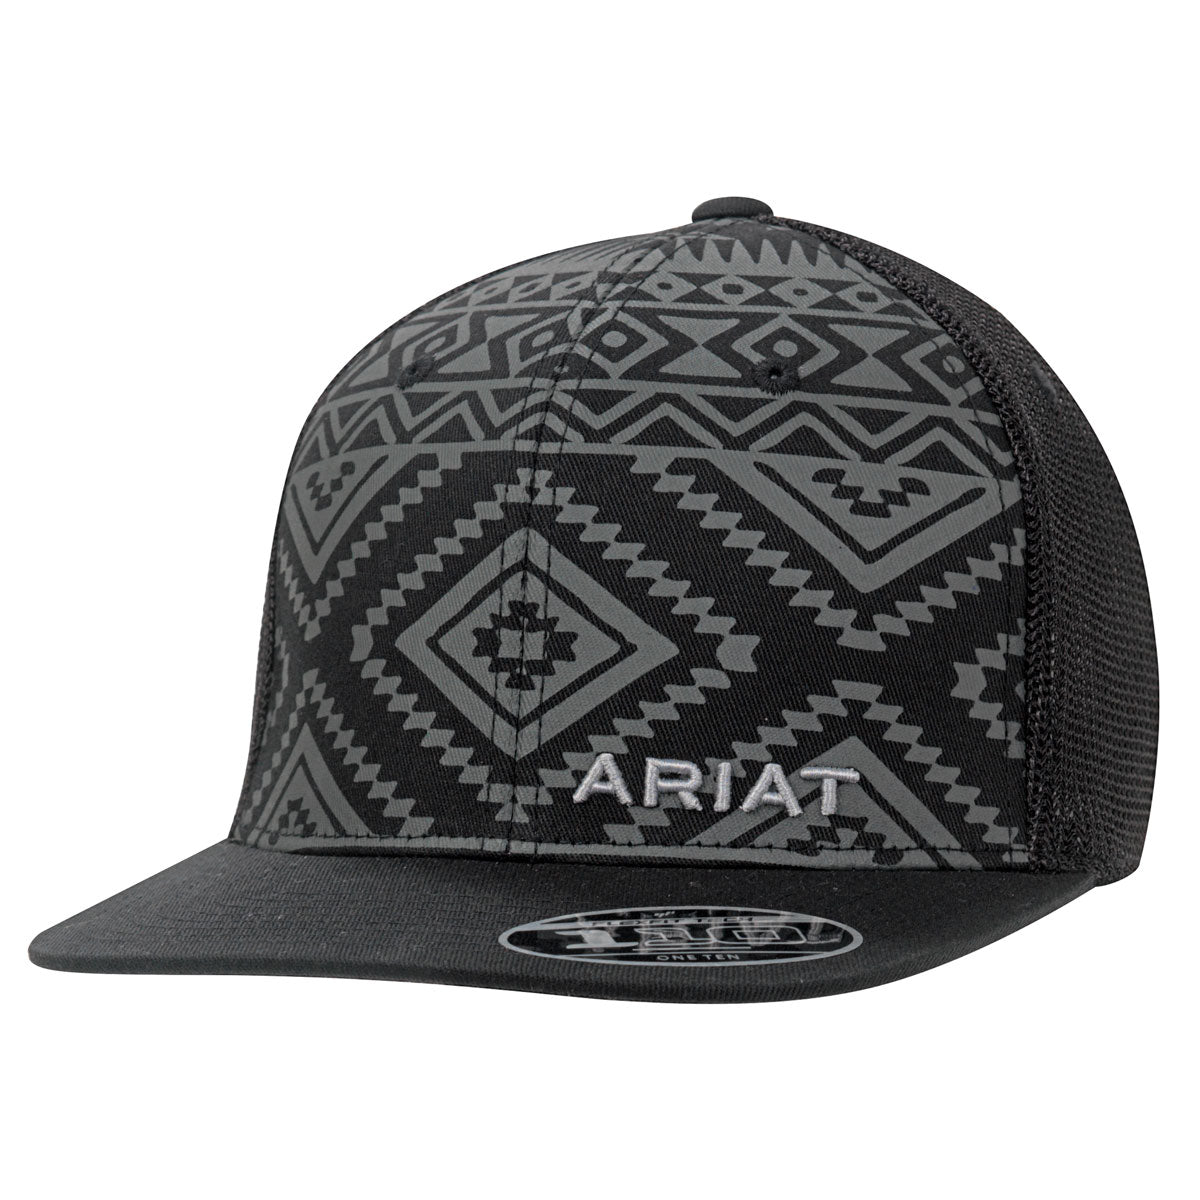 Ariat Tribal Black/Gray Cap